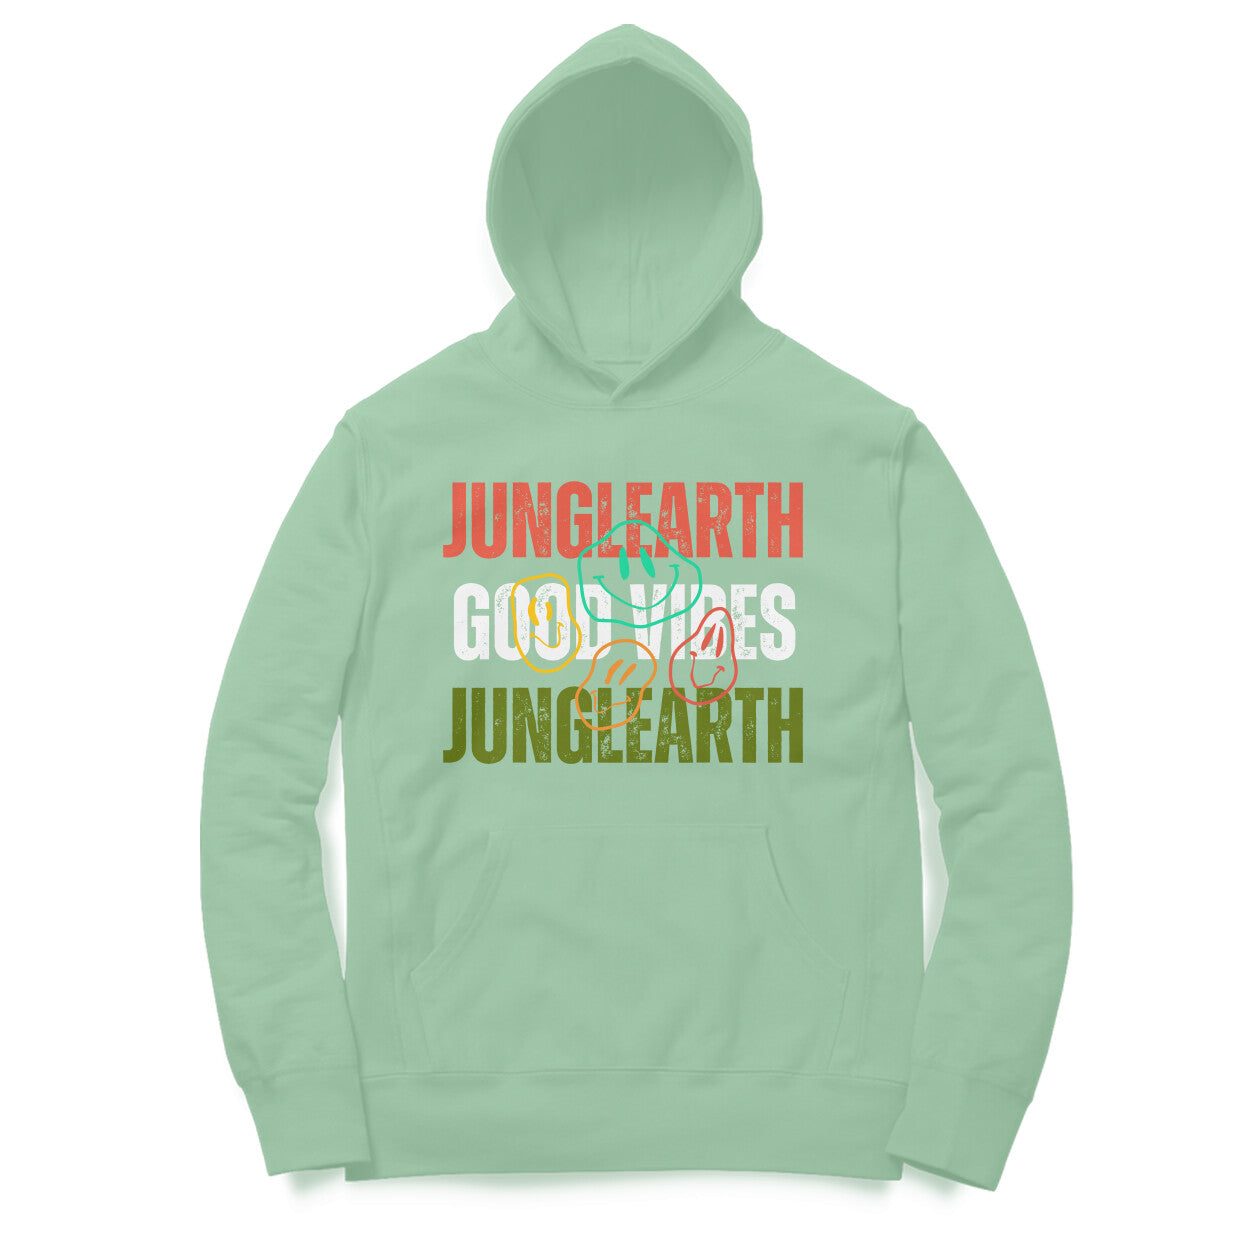 Junglearth Good Vibes hoodie